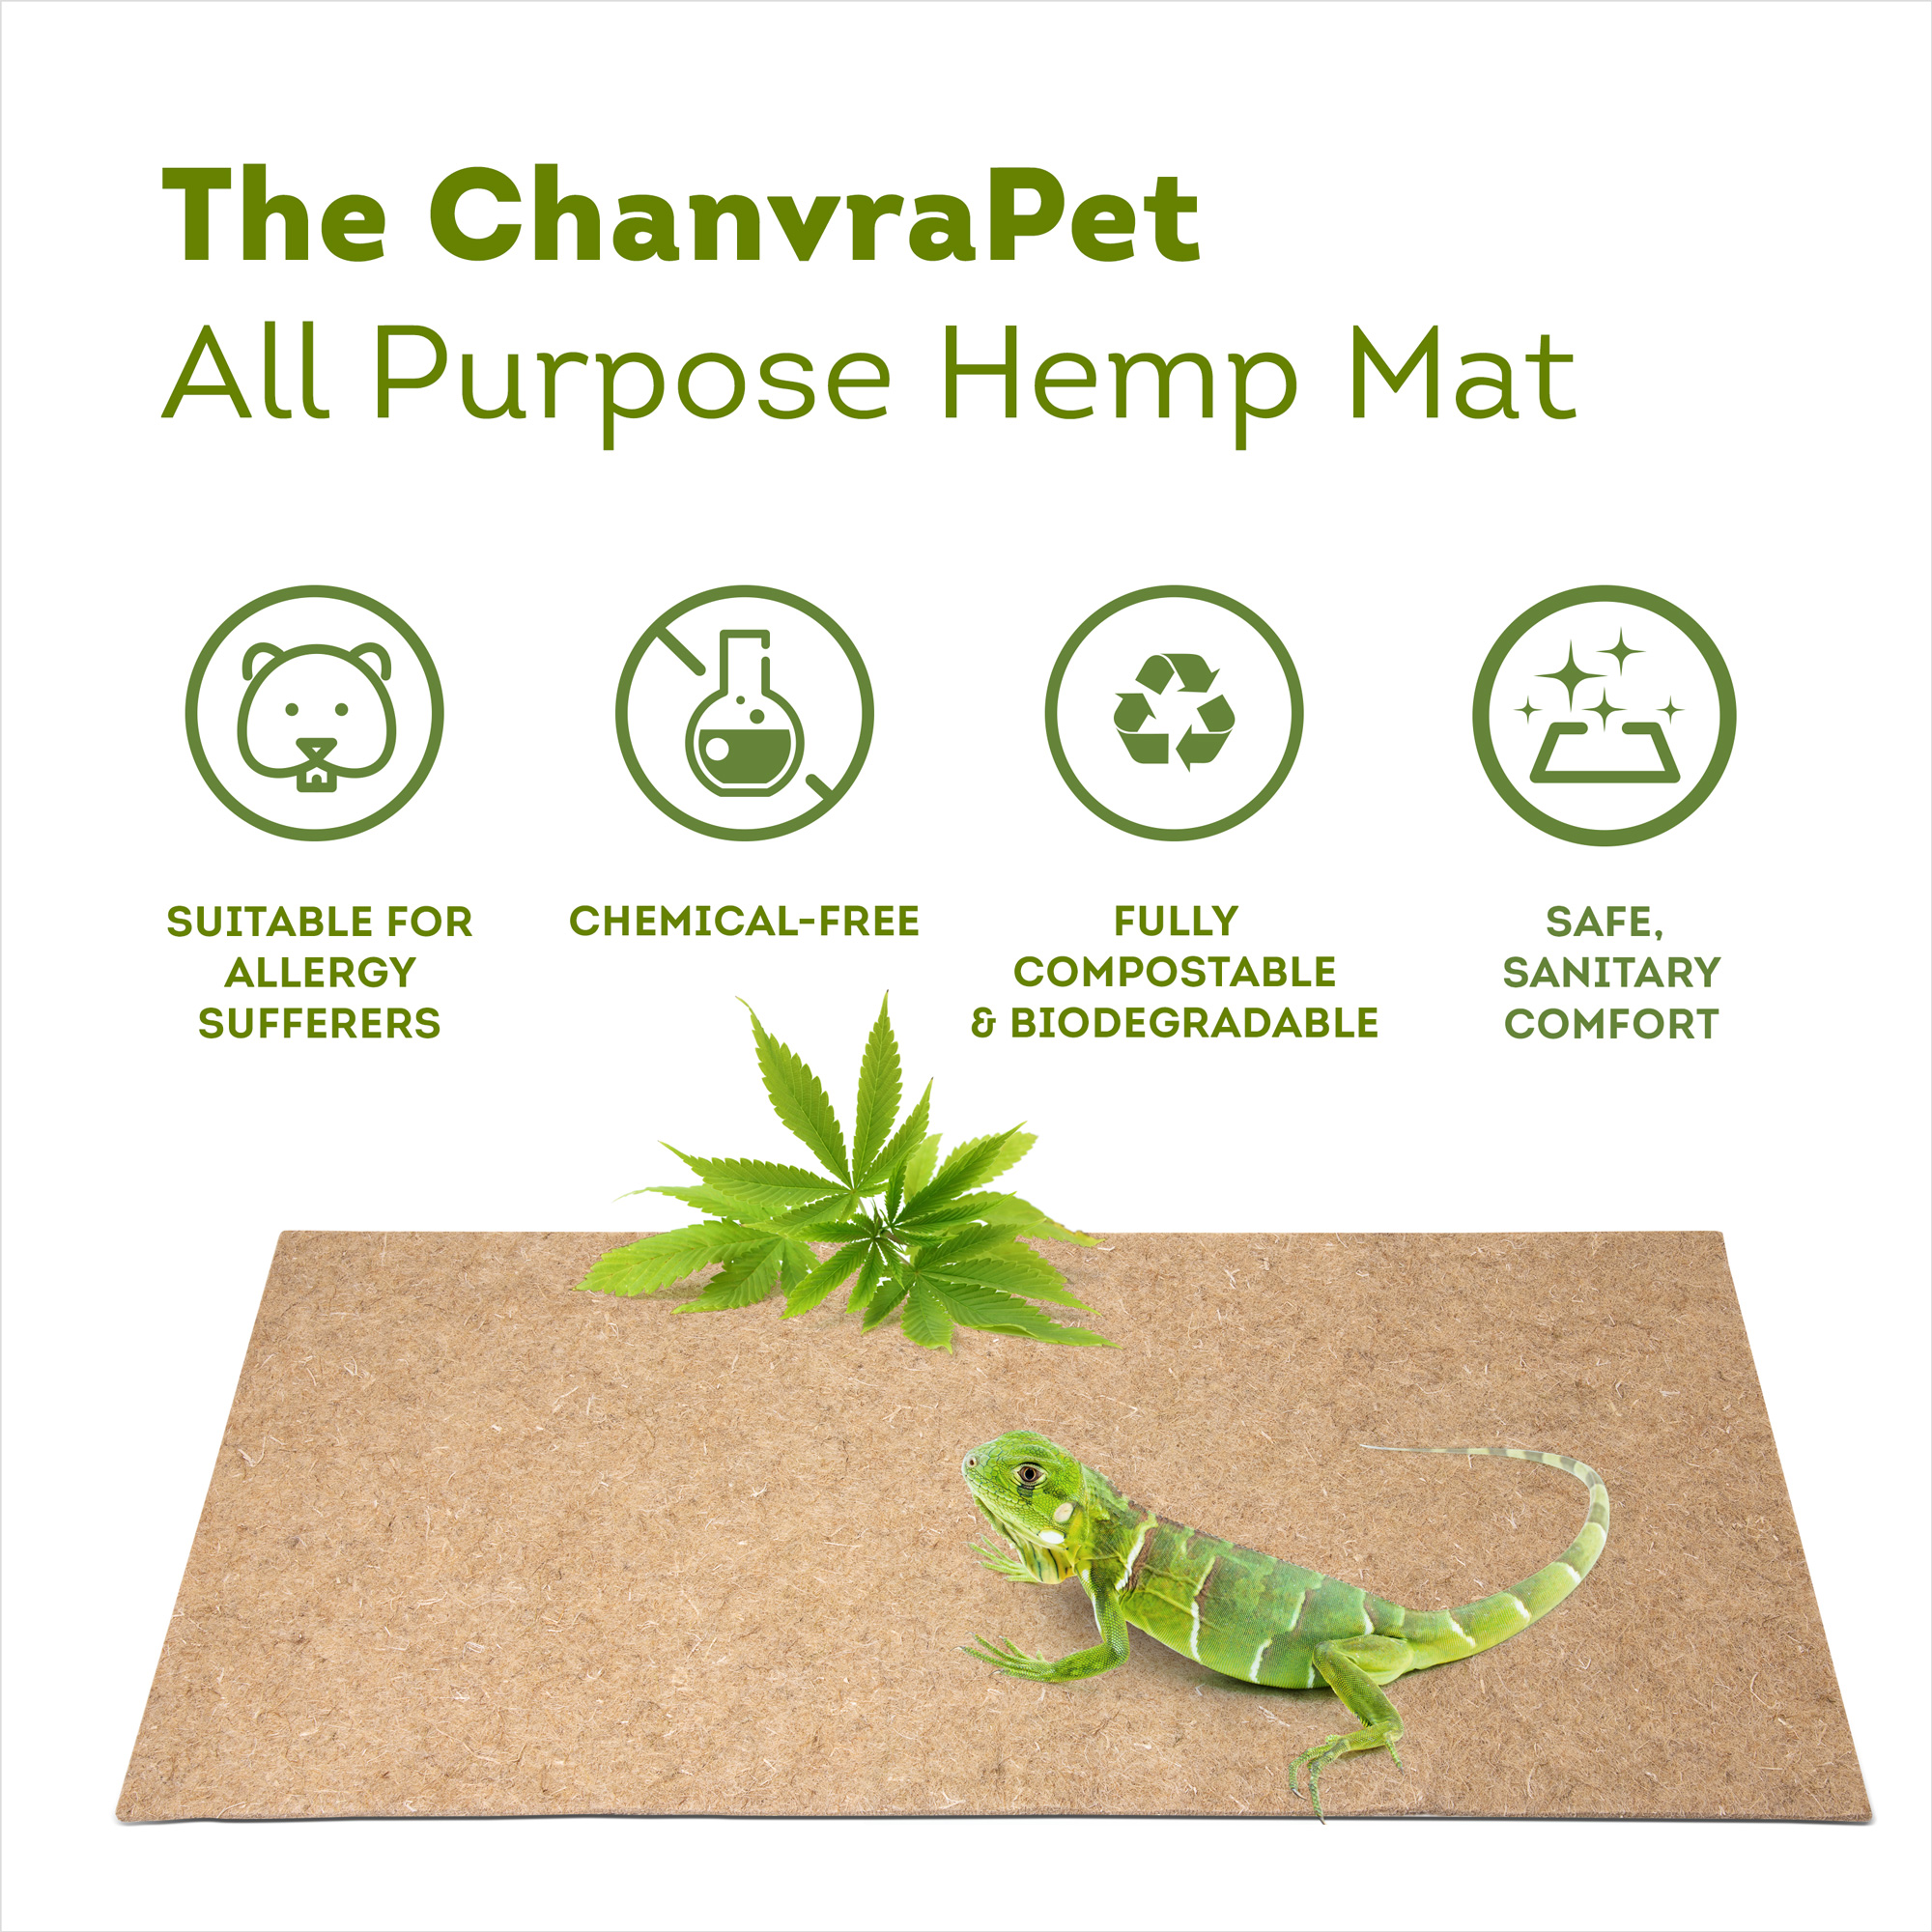 Chanvra Pet Hemp Mat Dimensional Infographic